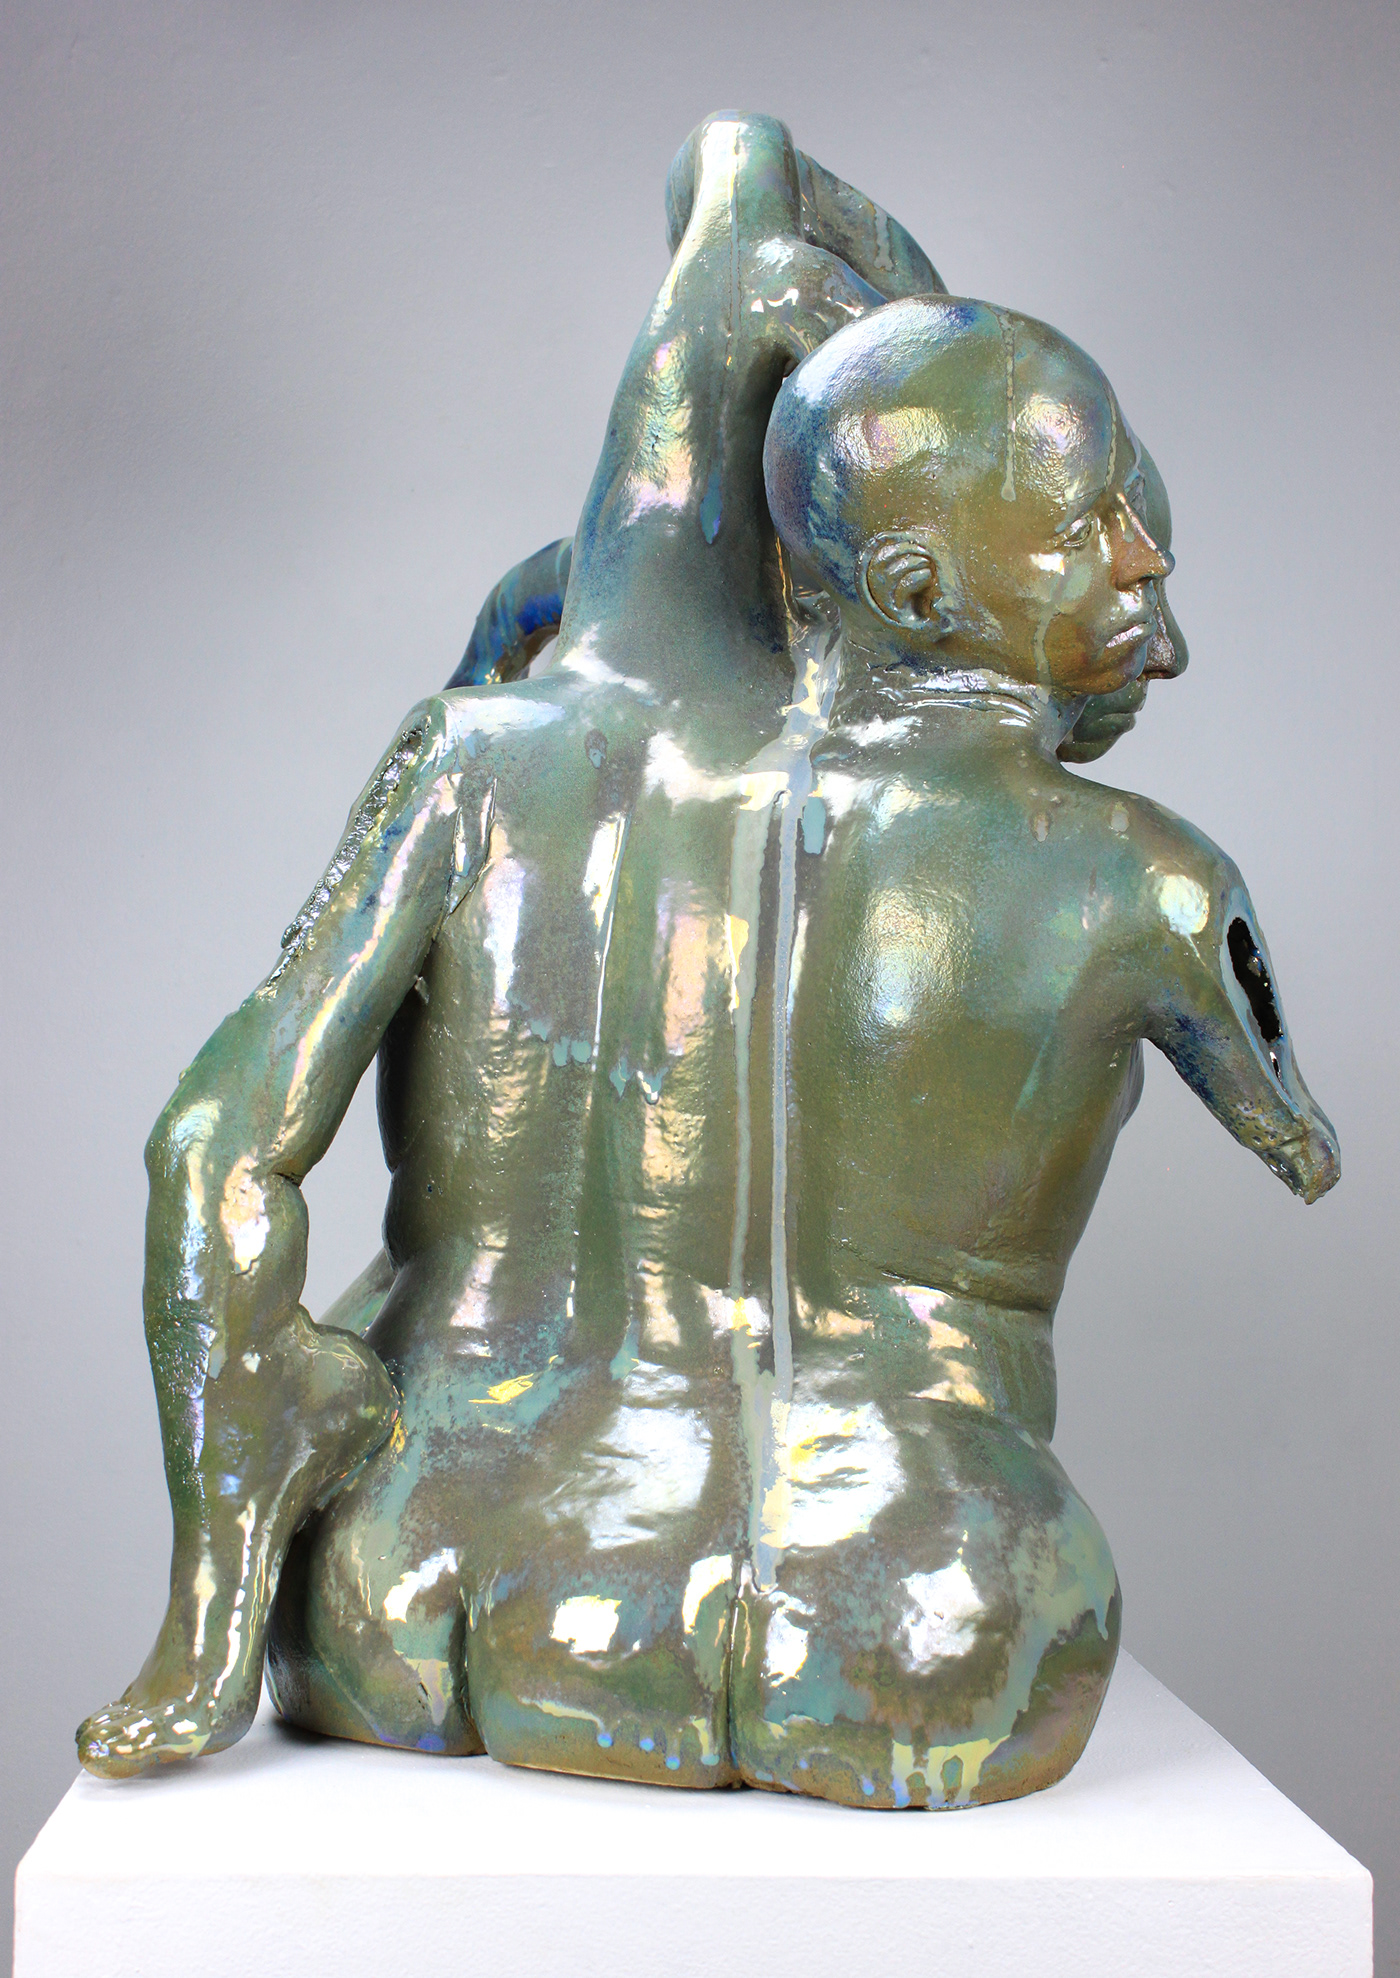 lustre gold ceramics  sculpture figurative femininity movement uncanny duality self